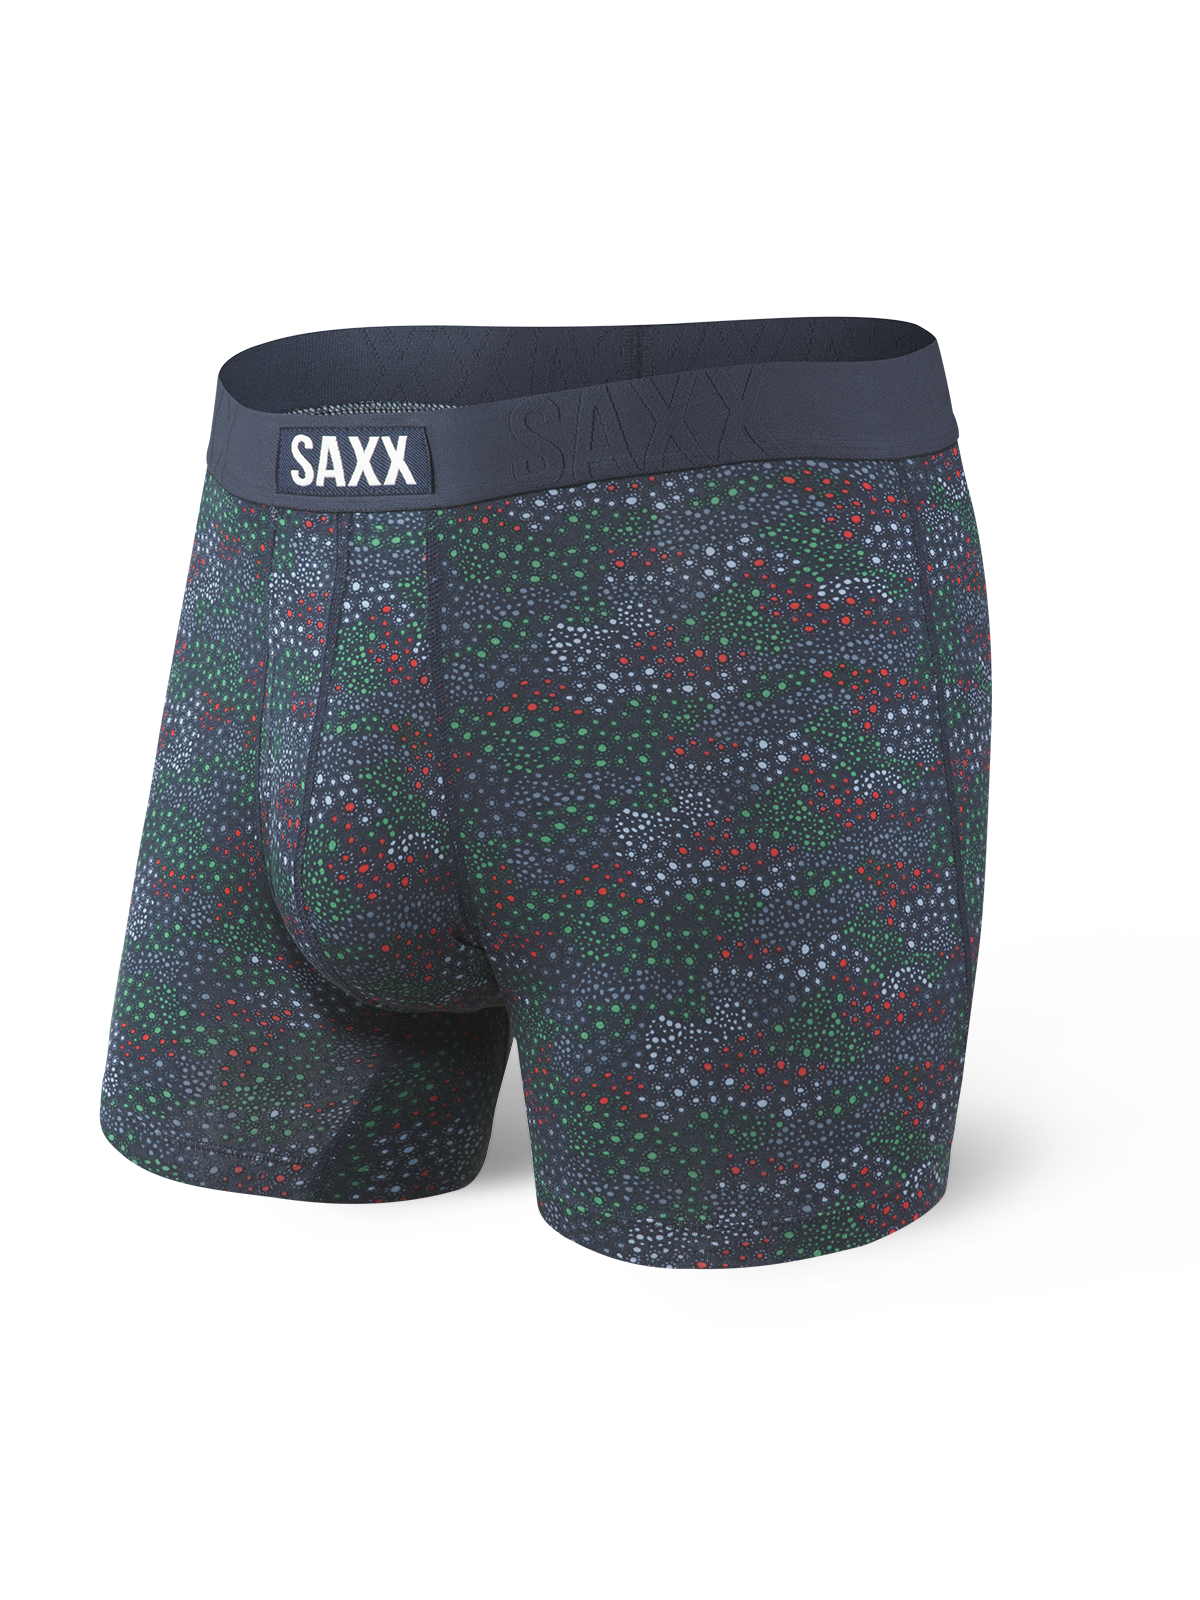 SAXX Undercover Boxer Brief Fly - Men's - Shoplifestyle